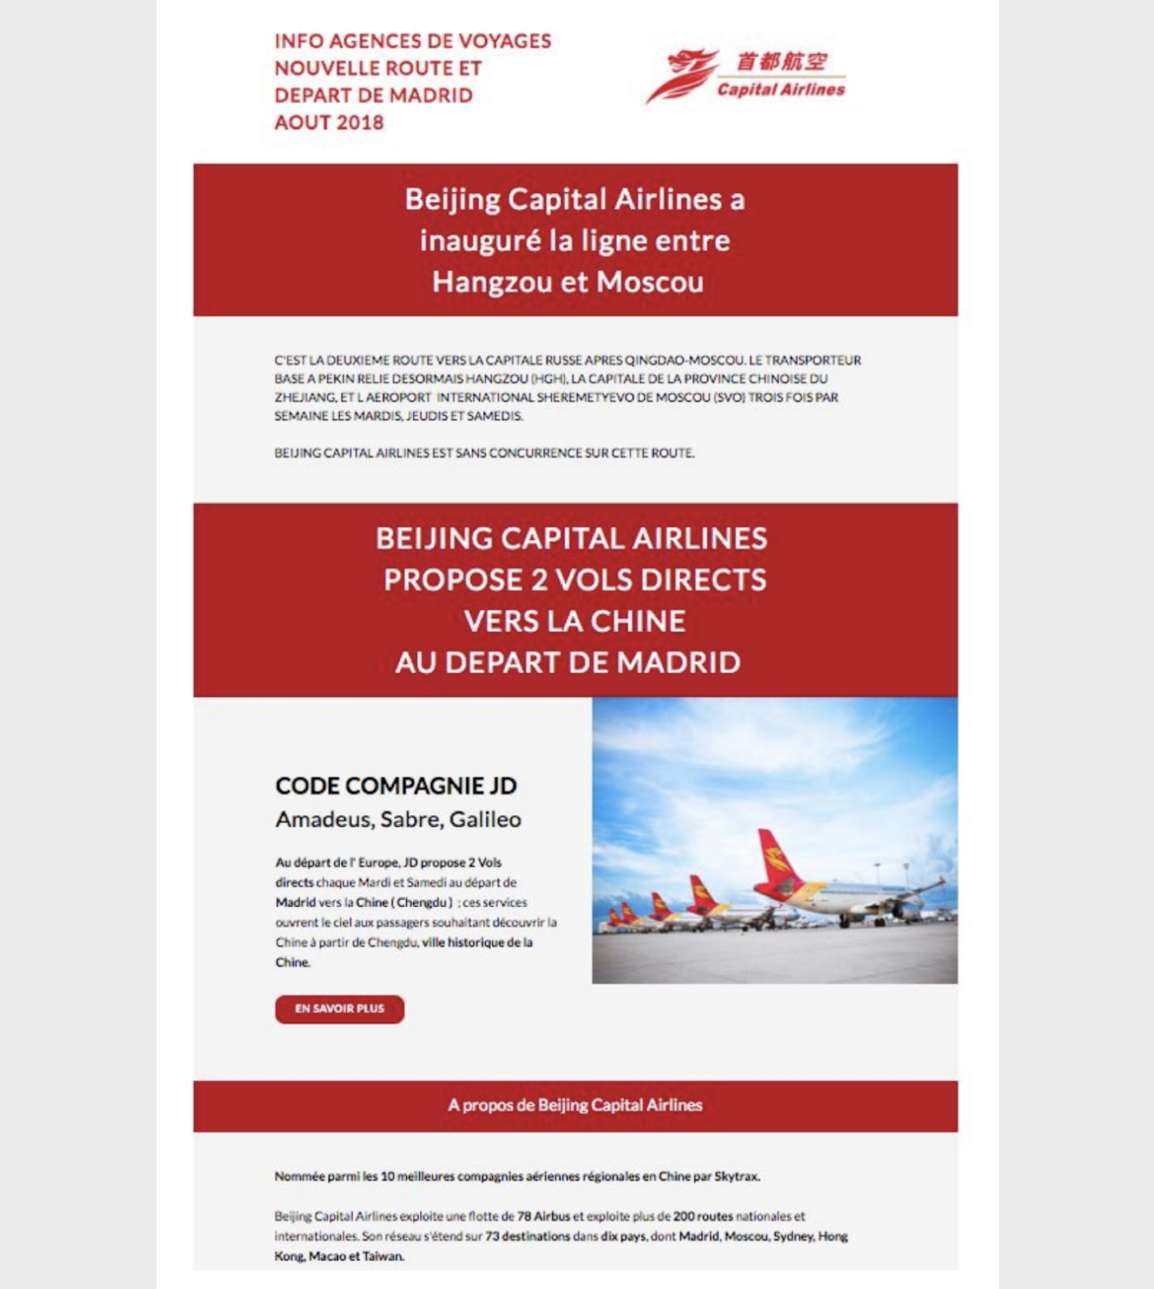 capital-airlines-web-zone-digital-zone-web-media